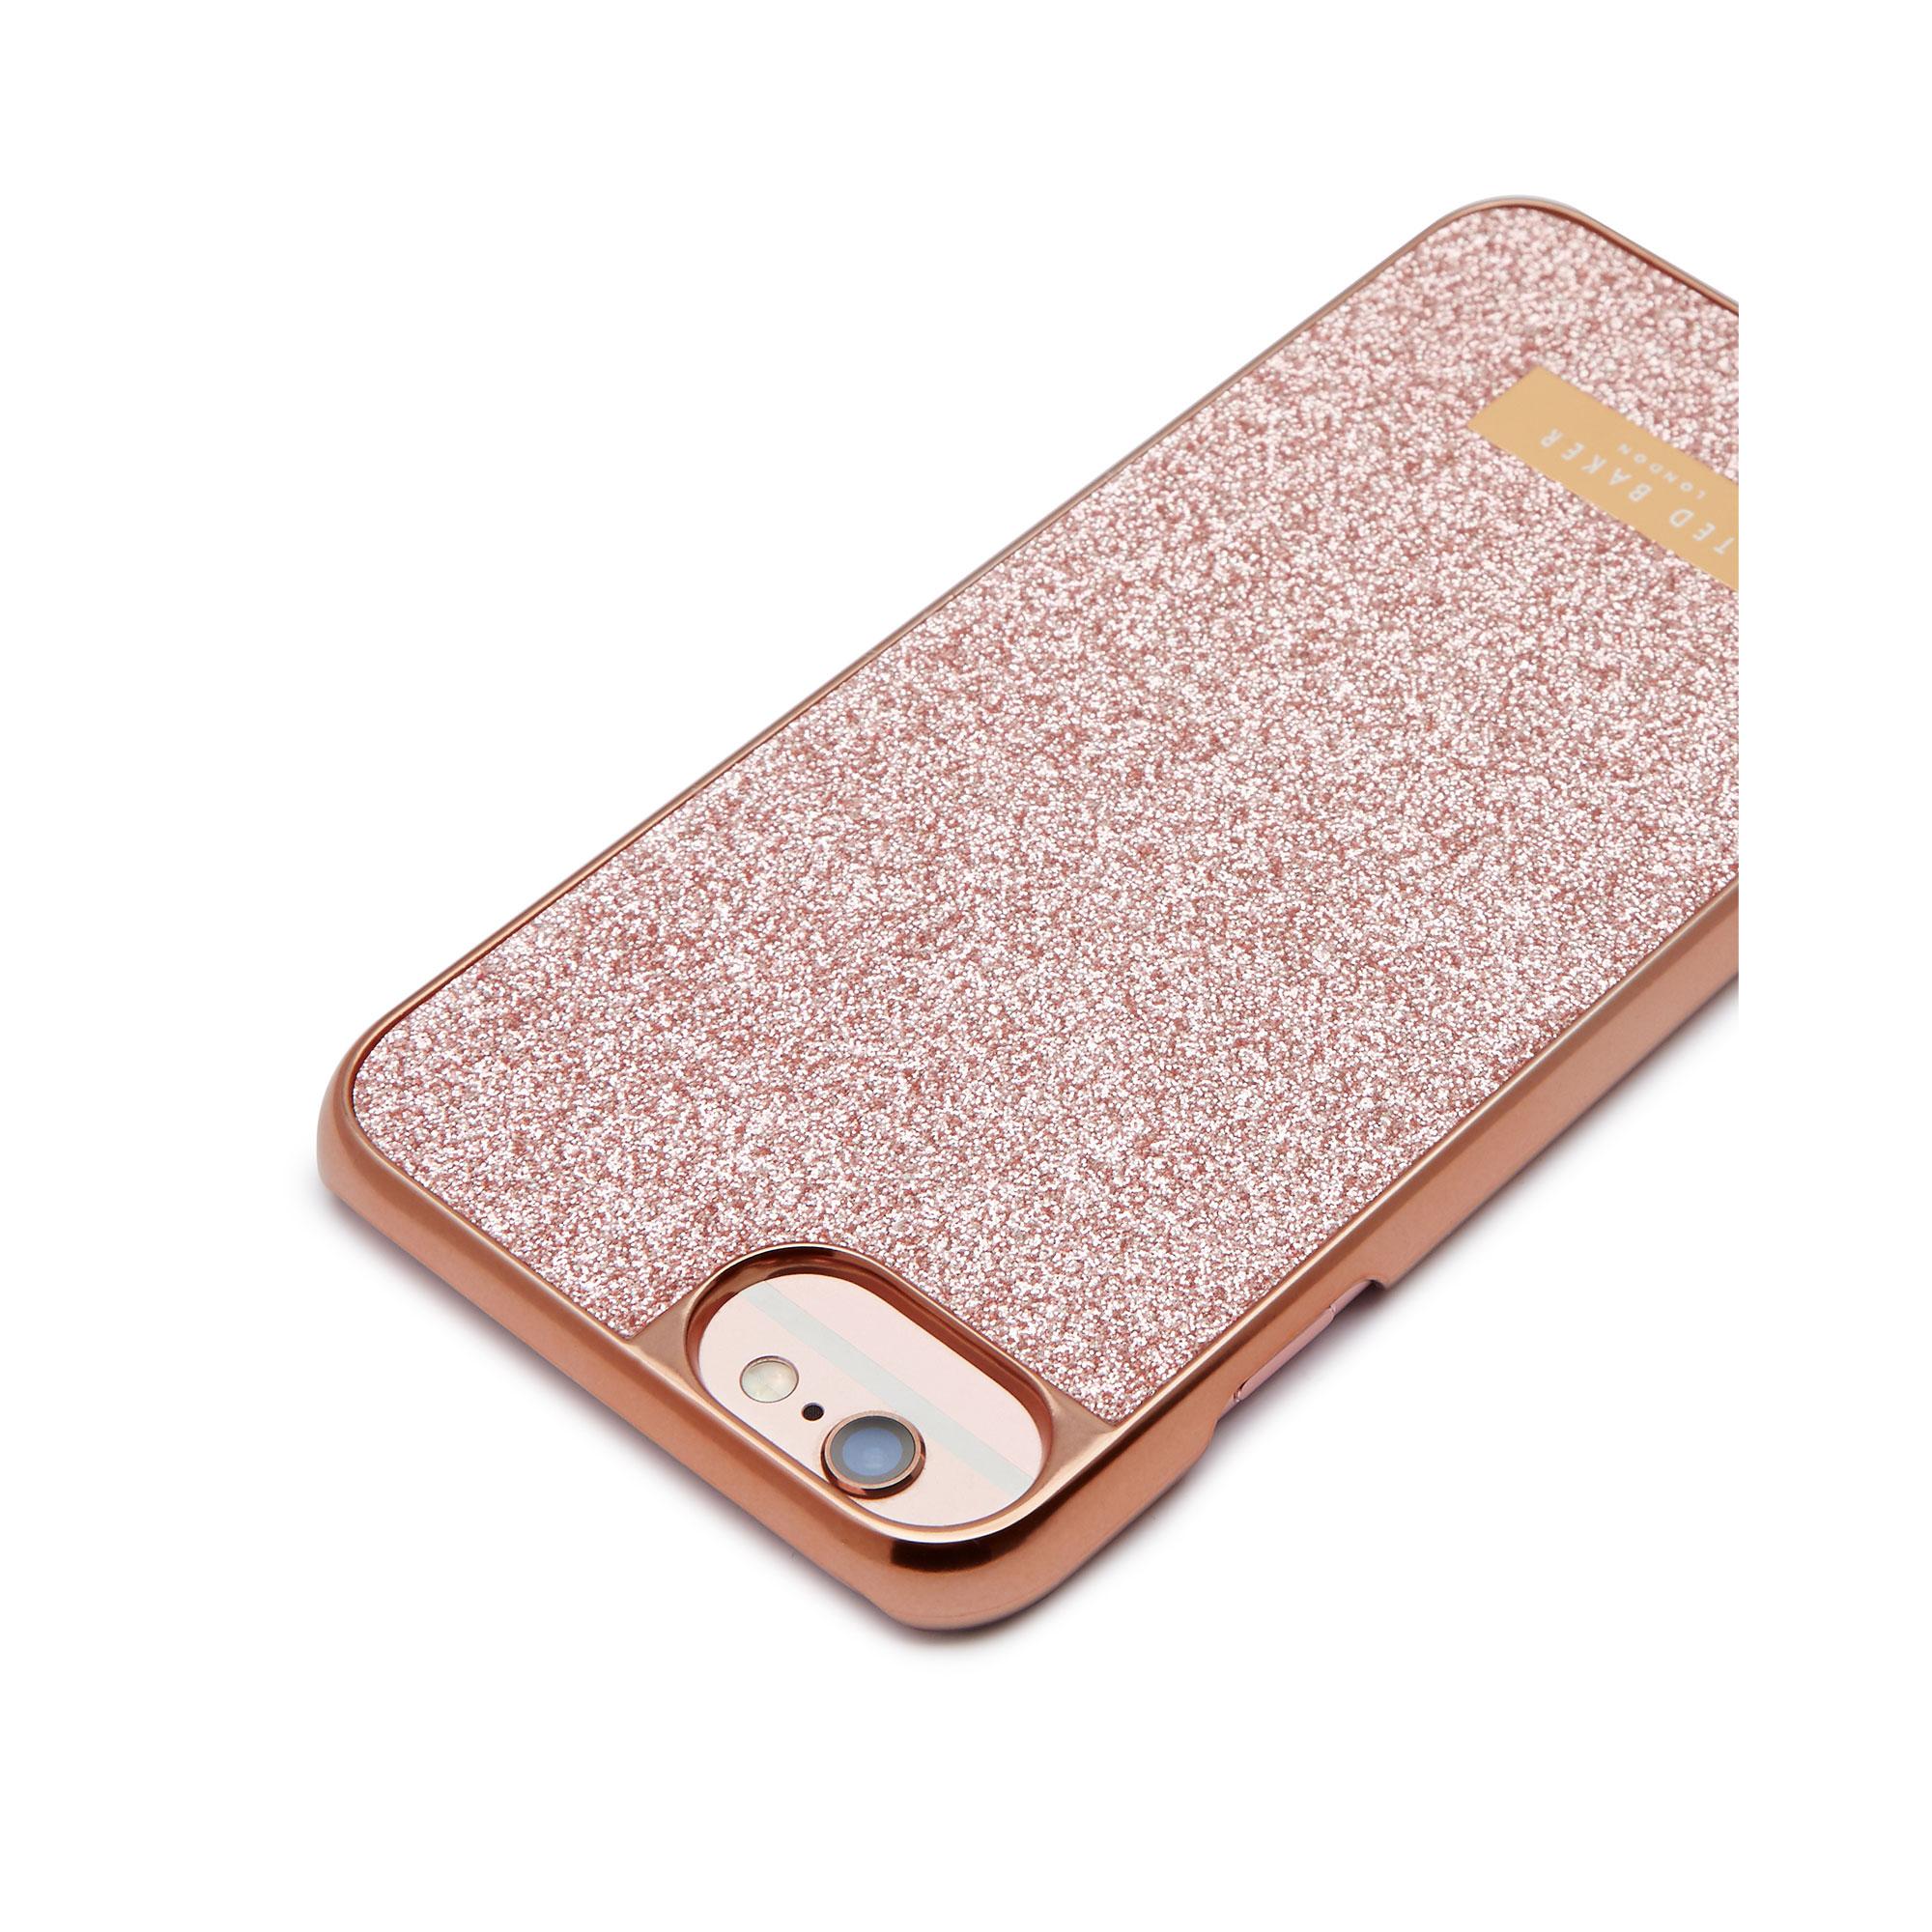 Sparkls Glitter iPhone 6/6s/7/8 Case